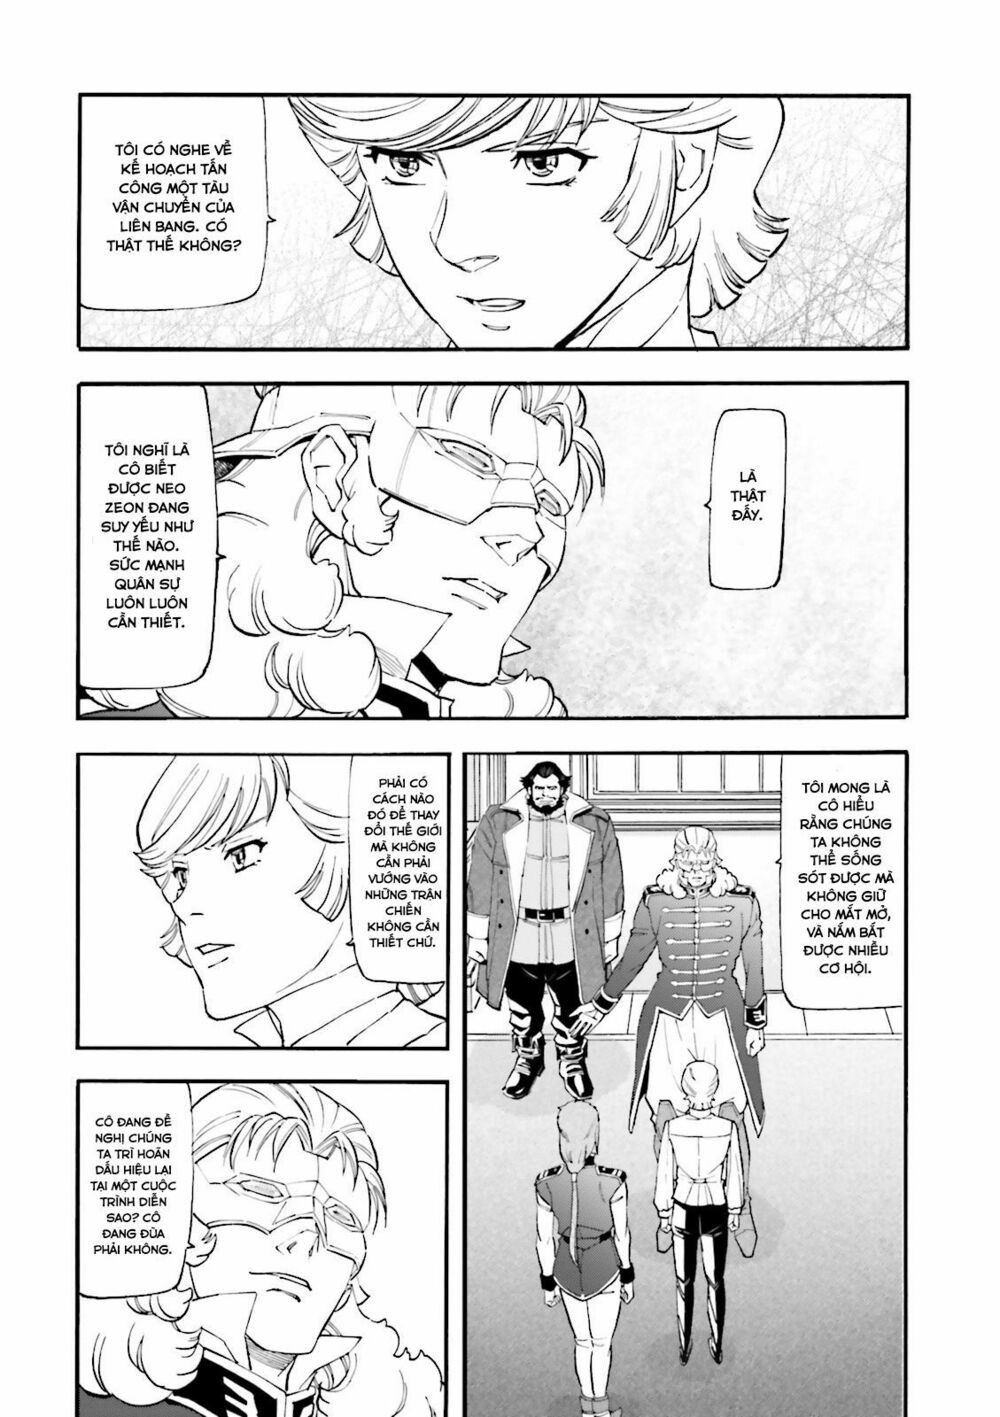 Kidou Senshi Gundam UC Bande Dessinée: Episode 0: Chapter 5